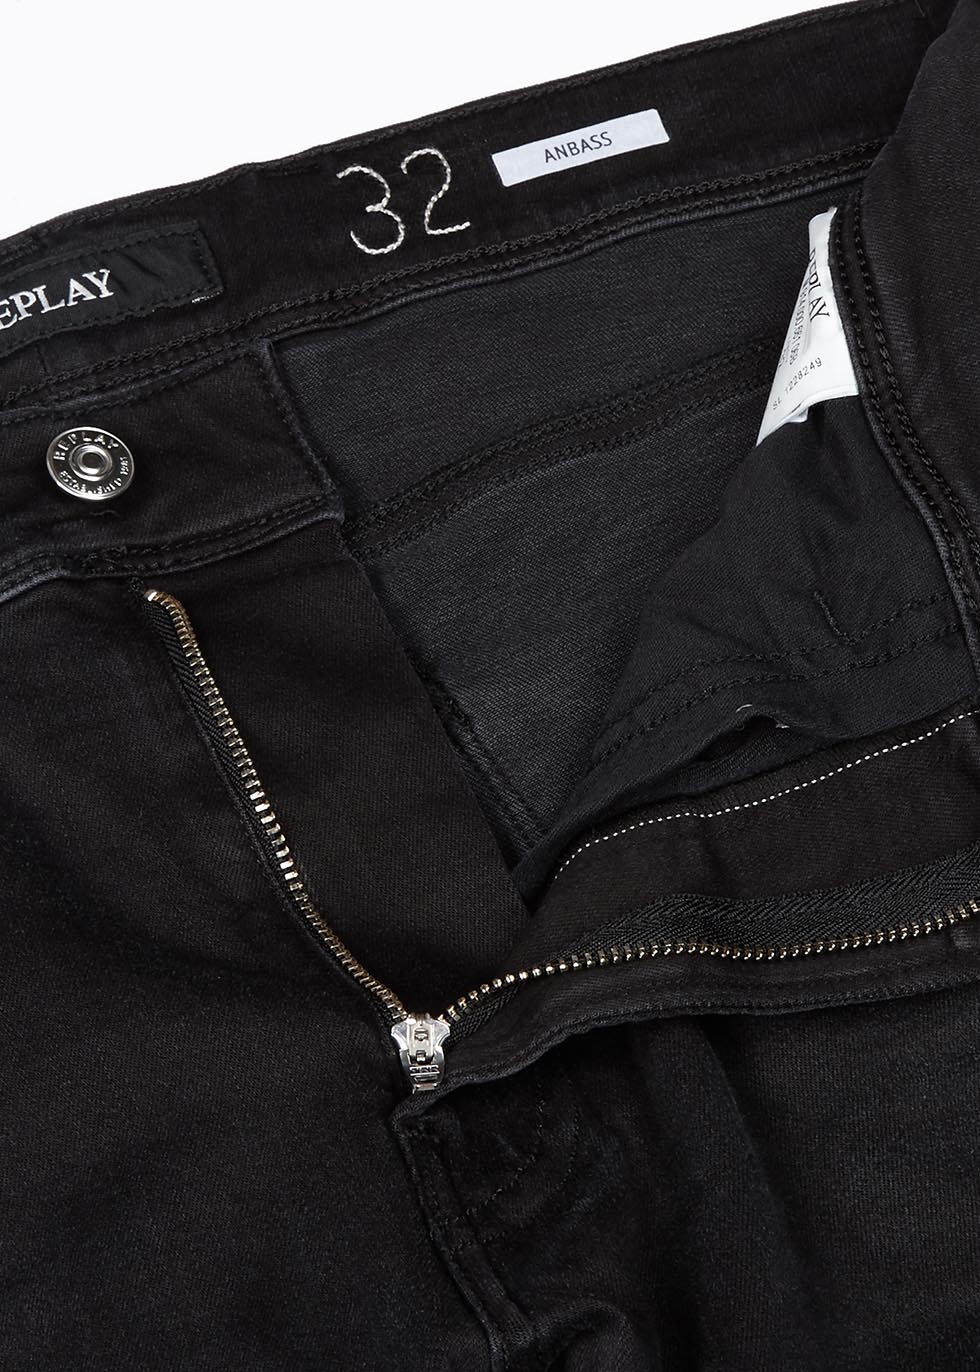 replay anbass hyperflex jeans black